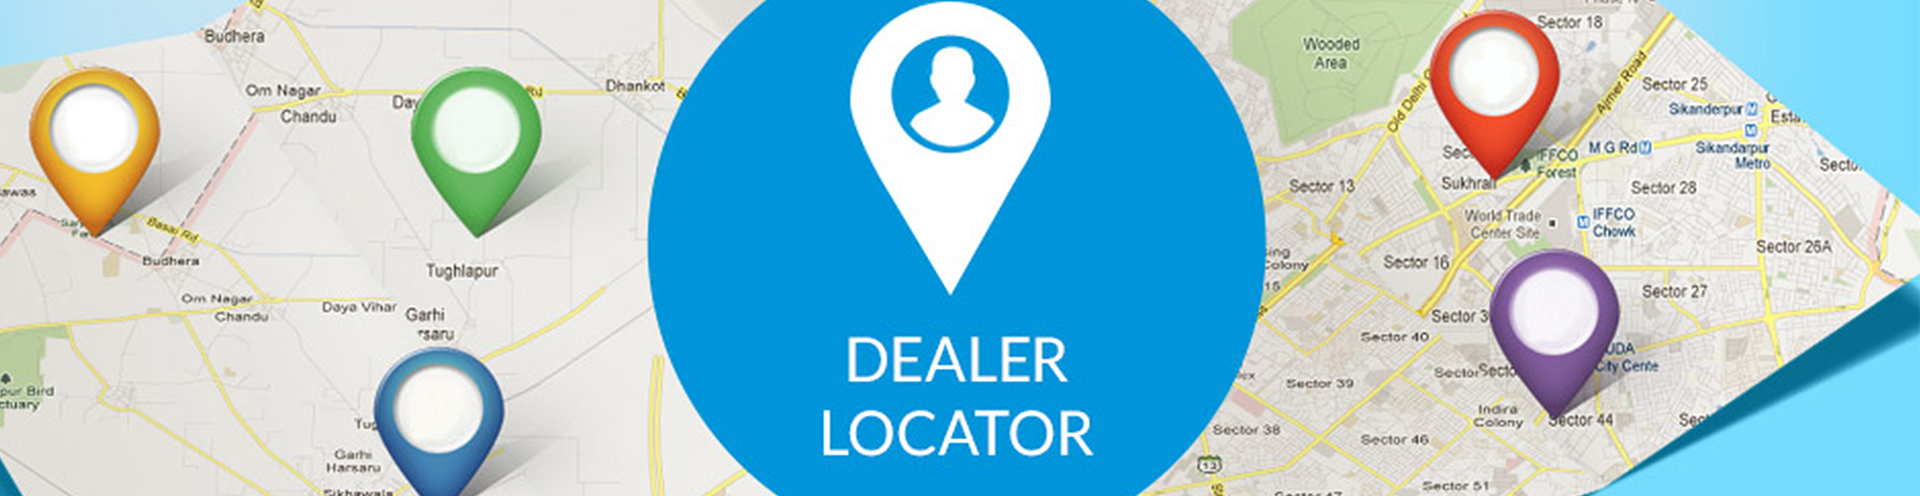 dealer-locator-banner -222th7